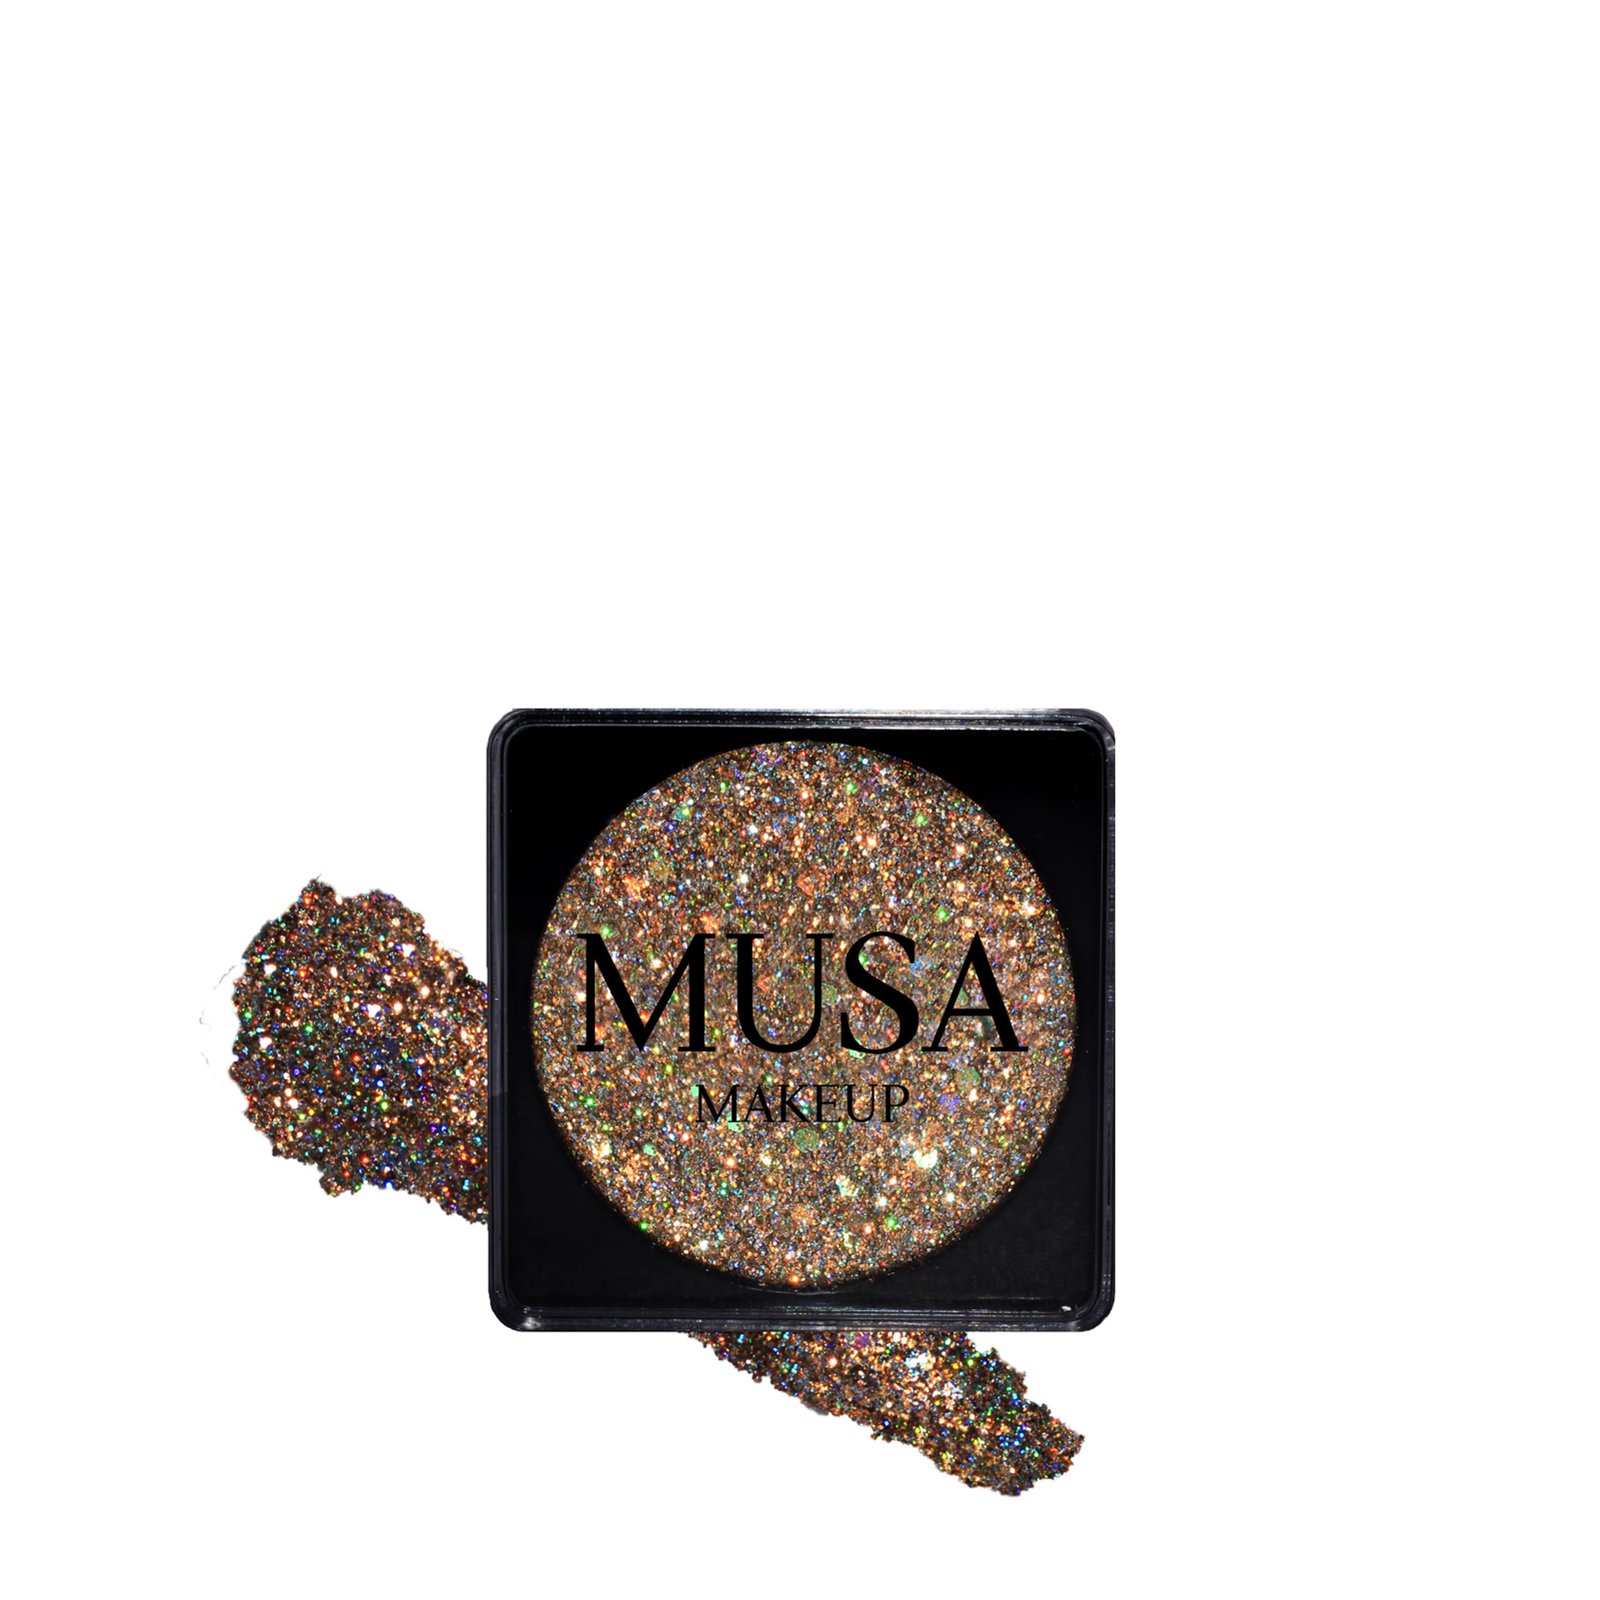 MUSA Makeup Creamy Glitter Pure Pearls 4g